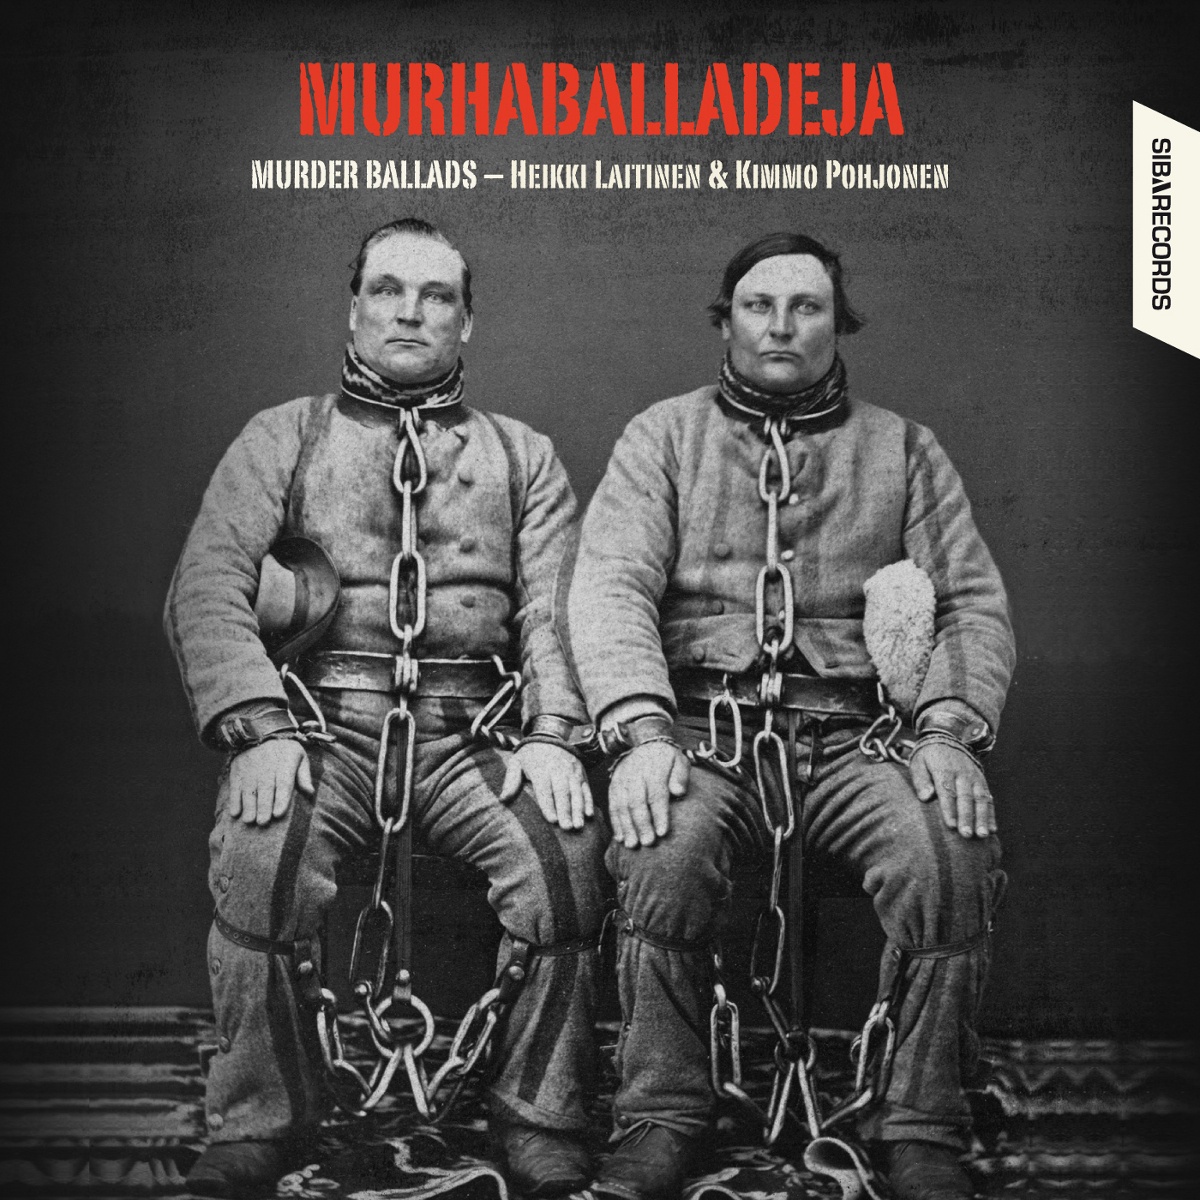 Murhaballadeja-Murder Ballads - Heikki Laitinen  Kimmo Pohjonen. (Superaudio CD)